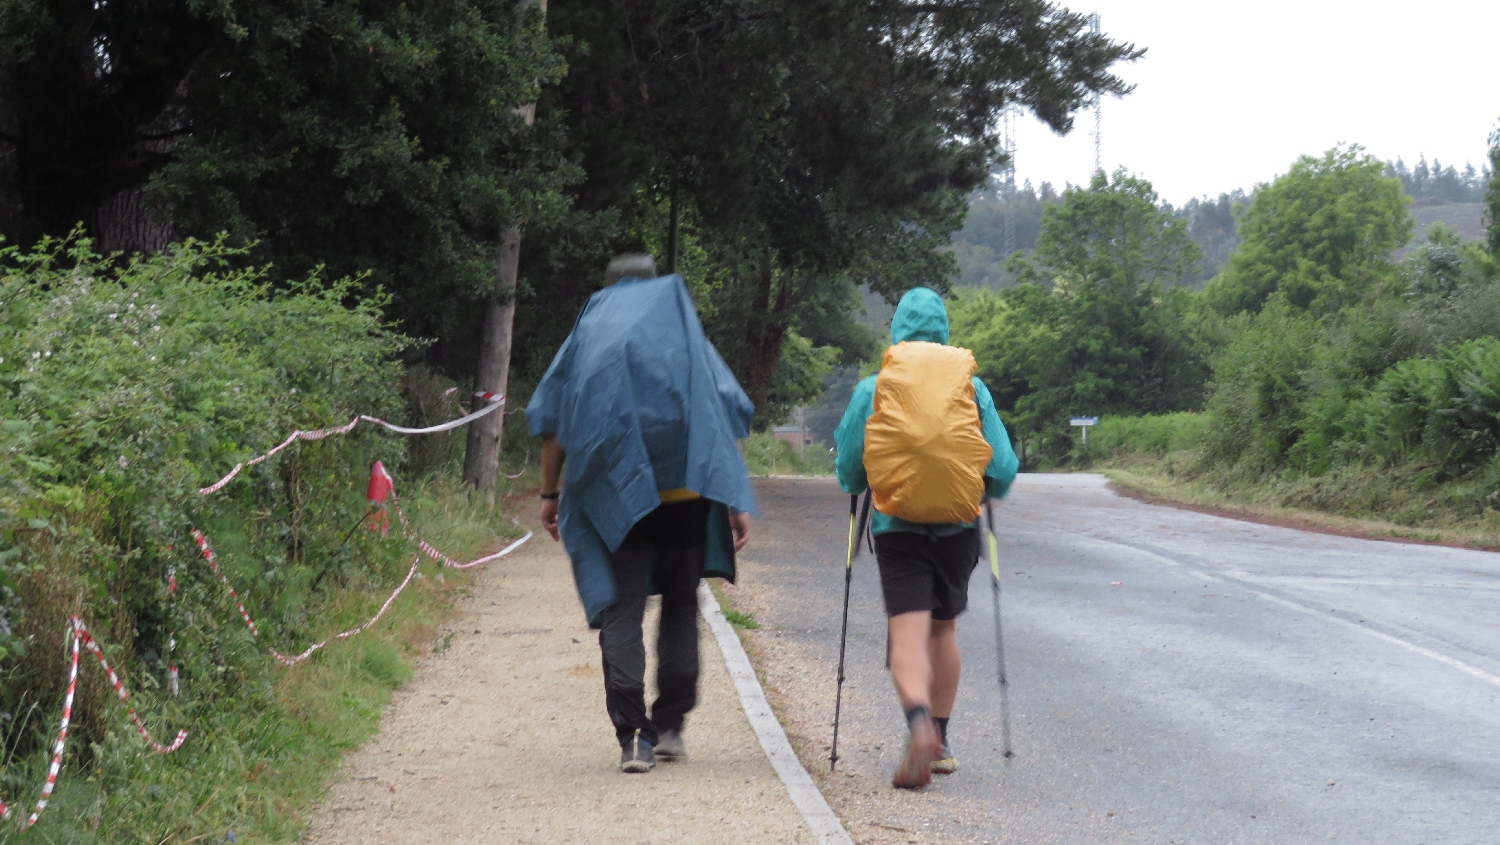 El Camino Primitivo, Francia út, zarándokok az esőben